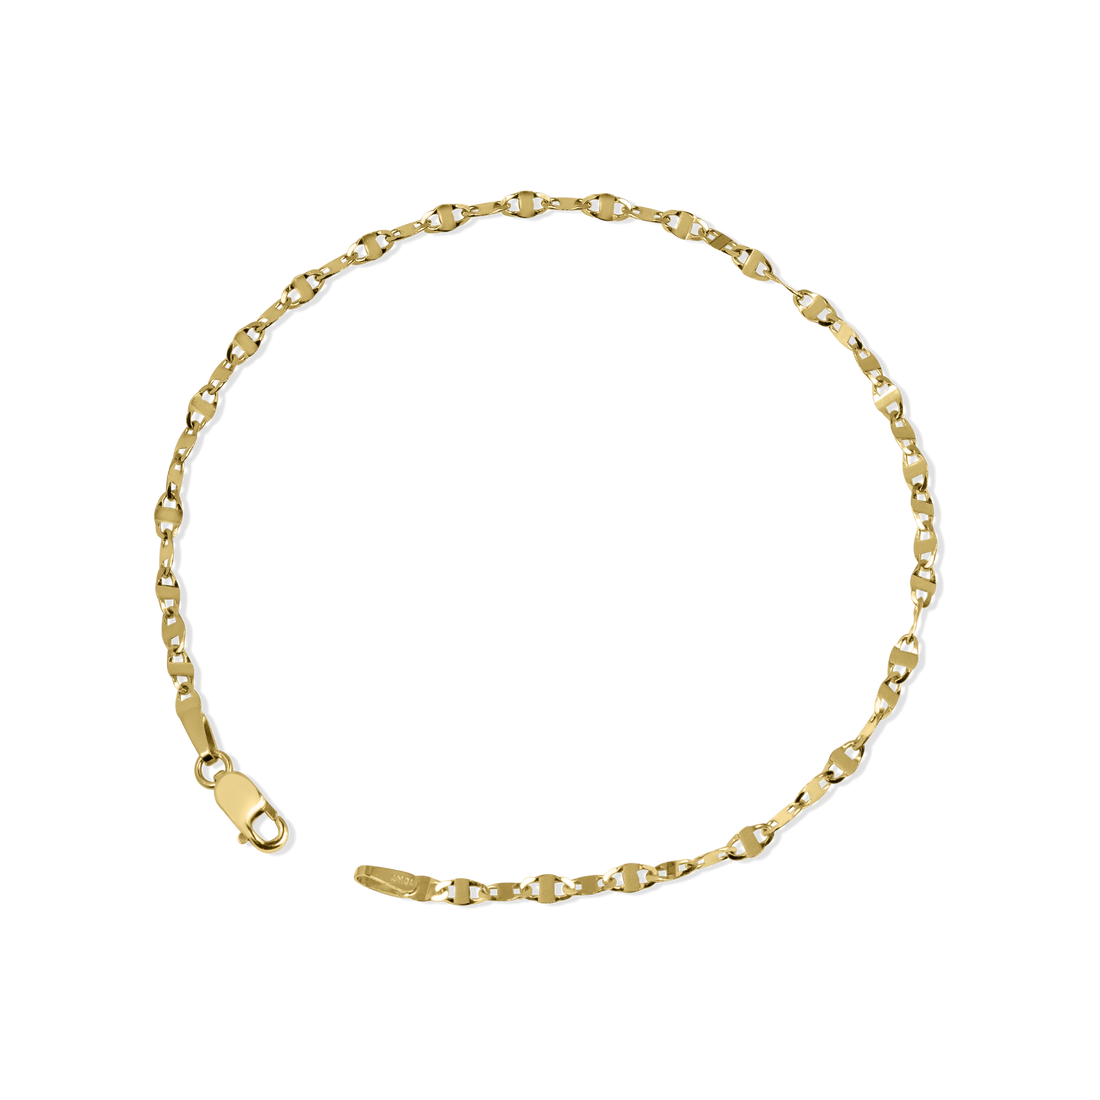 womens 10k bracelet toronto, 10k gold bracelet toronto, womens gold bracelets canada, 10k gold bracelet canada, dainty gold bracelet womens